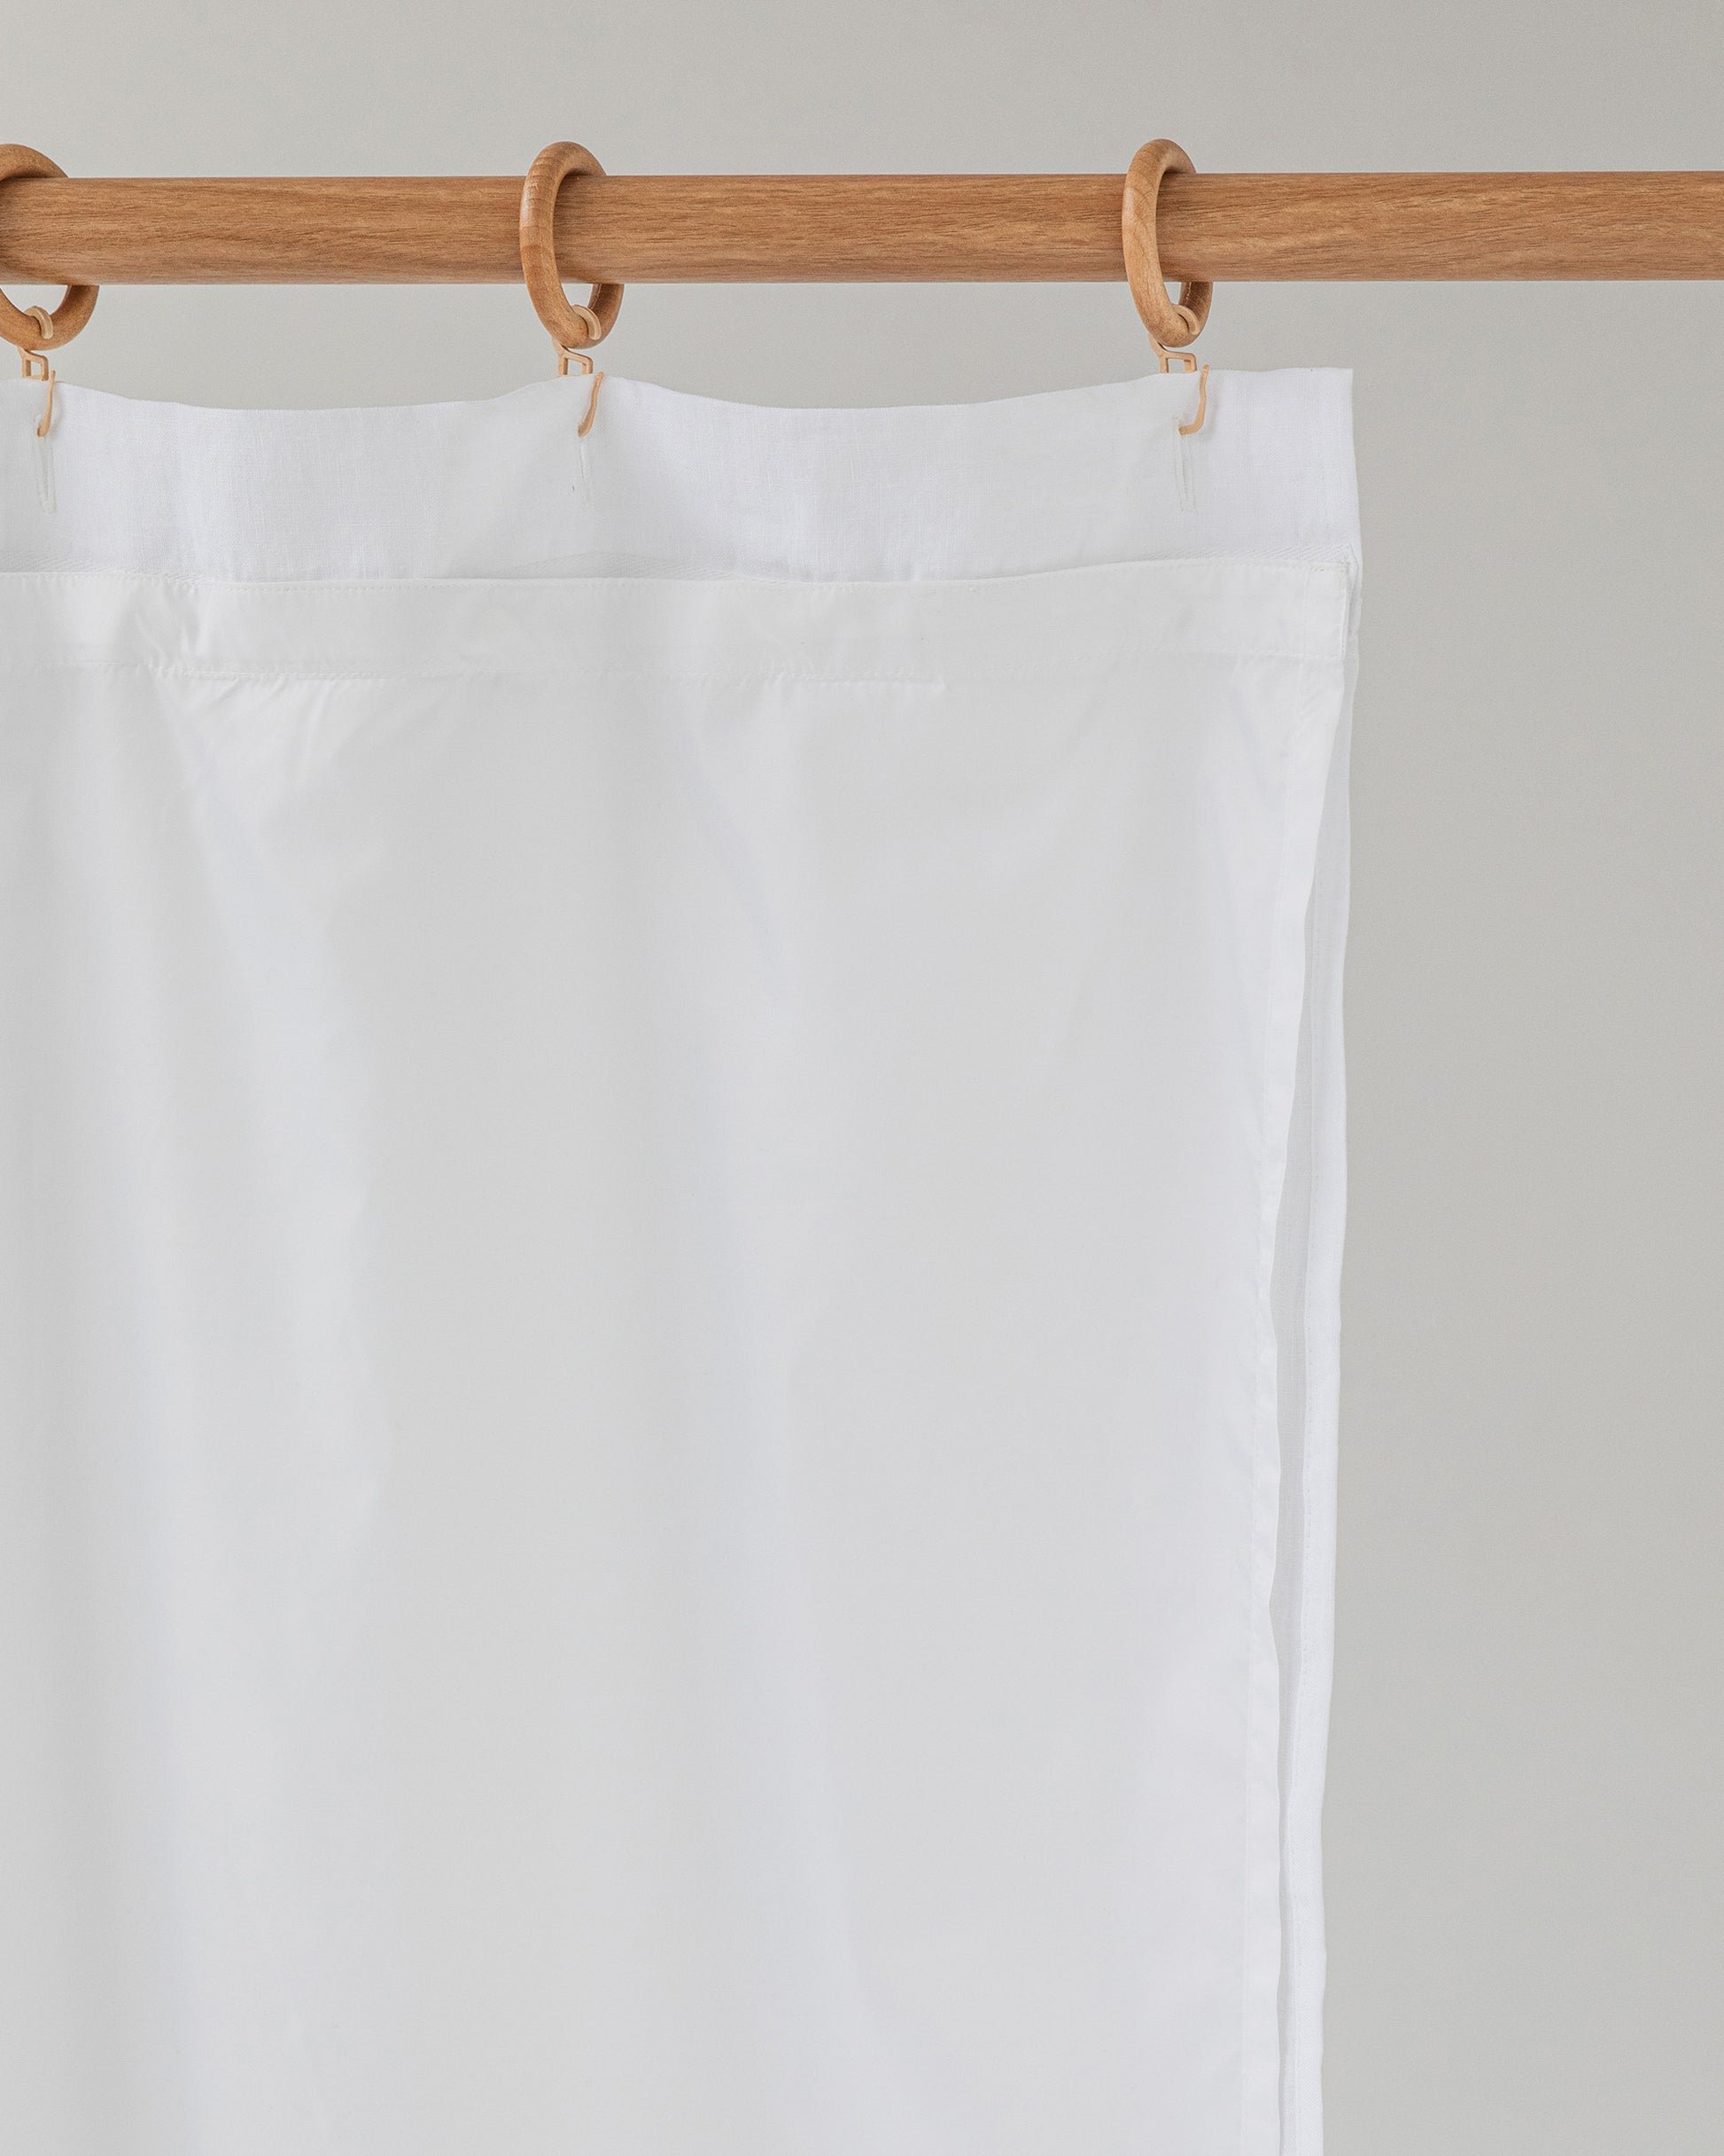 Waterproof linen shower curtain (1 pcs) in White - MagicLinen